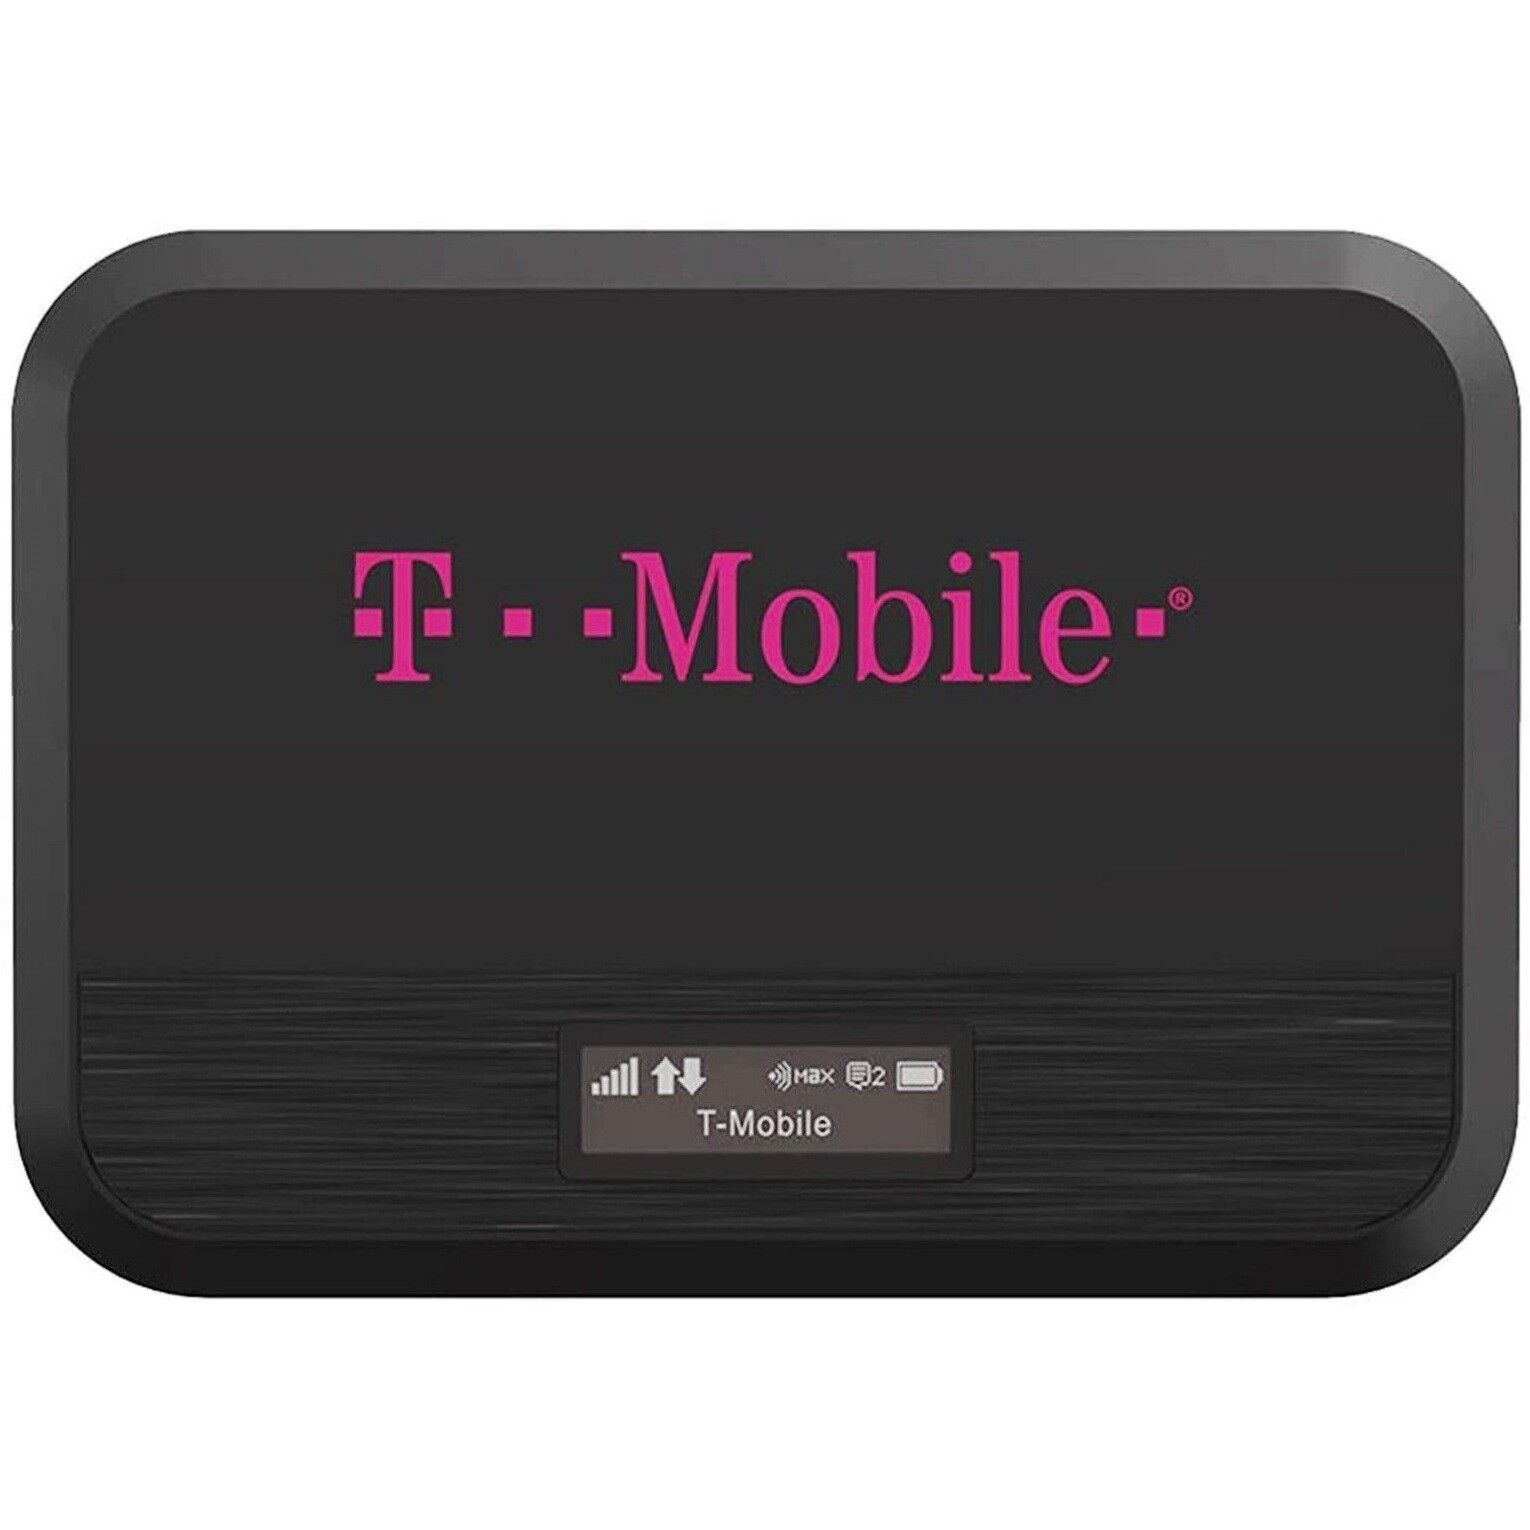 NEW Franklin T9 - RT717 - Black (Unlocked) 4G LTE GSM Mobile WiFi Hotspot Modem